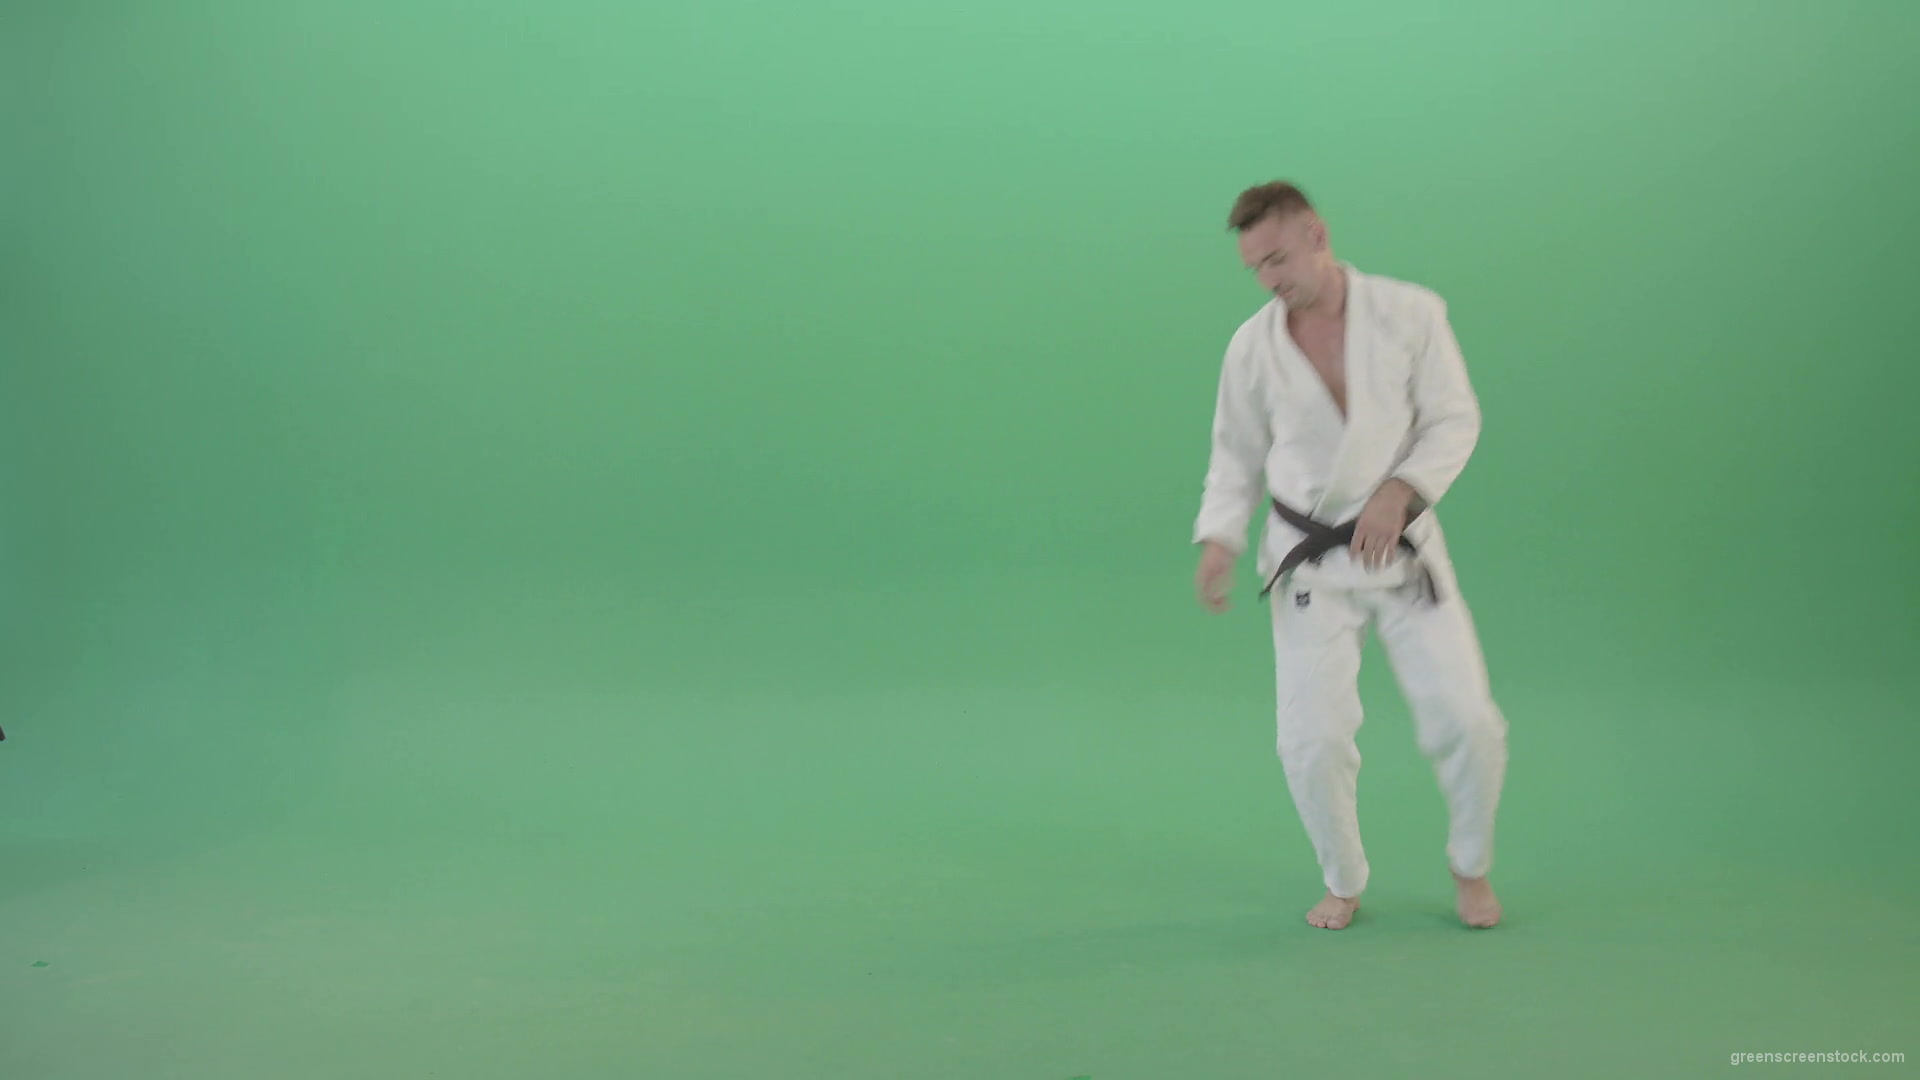 Karate-Sport-man-make-side-kick-isolated-on-green-screen-4K-Video-Footage-1920_009 Green Screen Stock